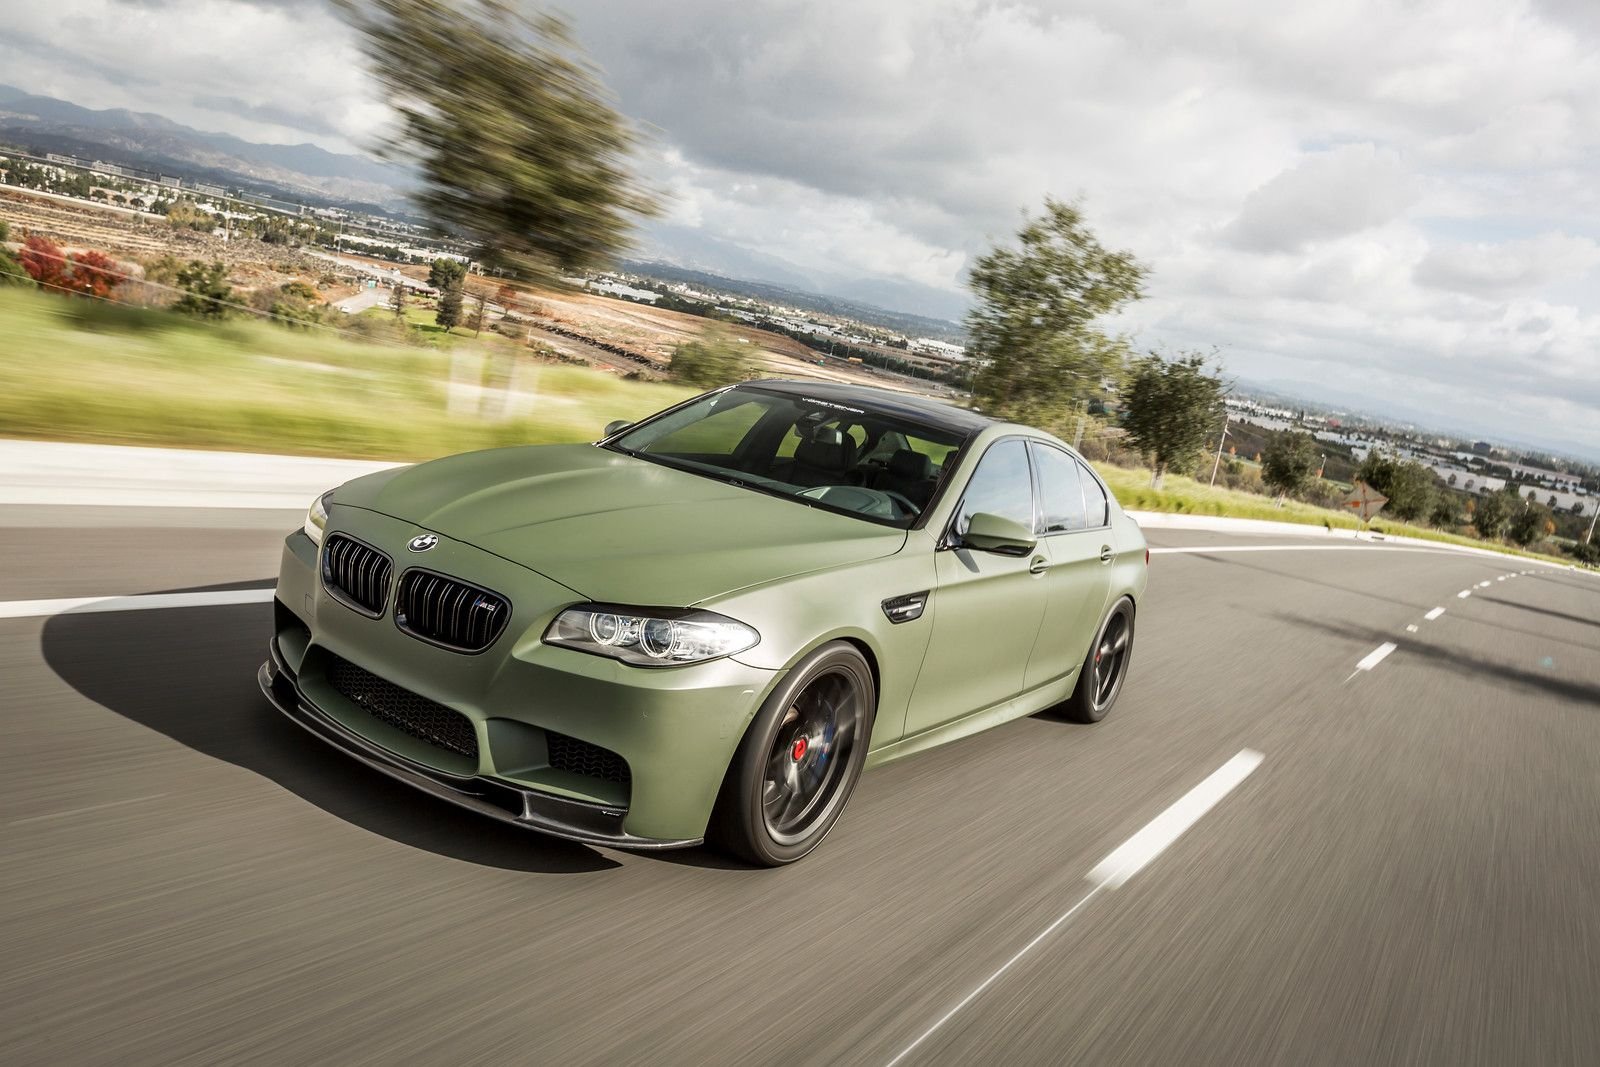 Бмв хаки. BMW m5 f10 Green. BMW 5 f10 Military Green. BMW f10 хаки. F10 BMW m5 зеленая.